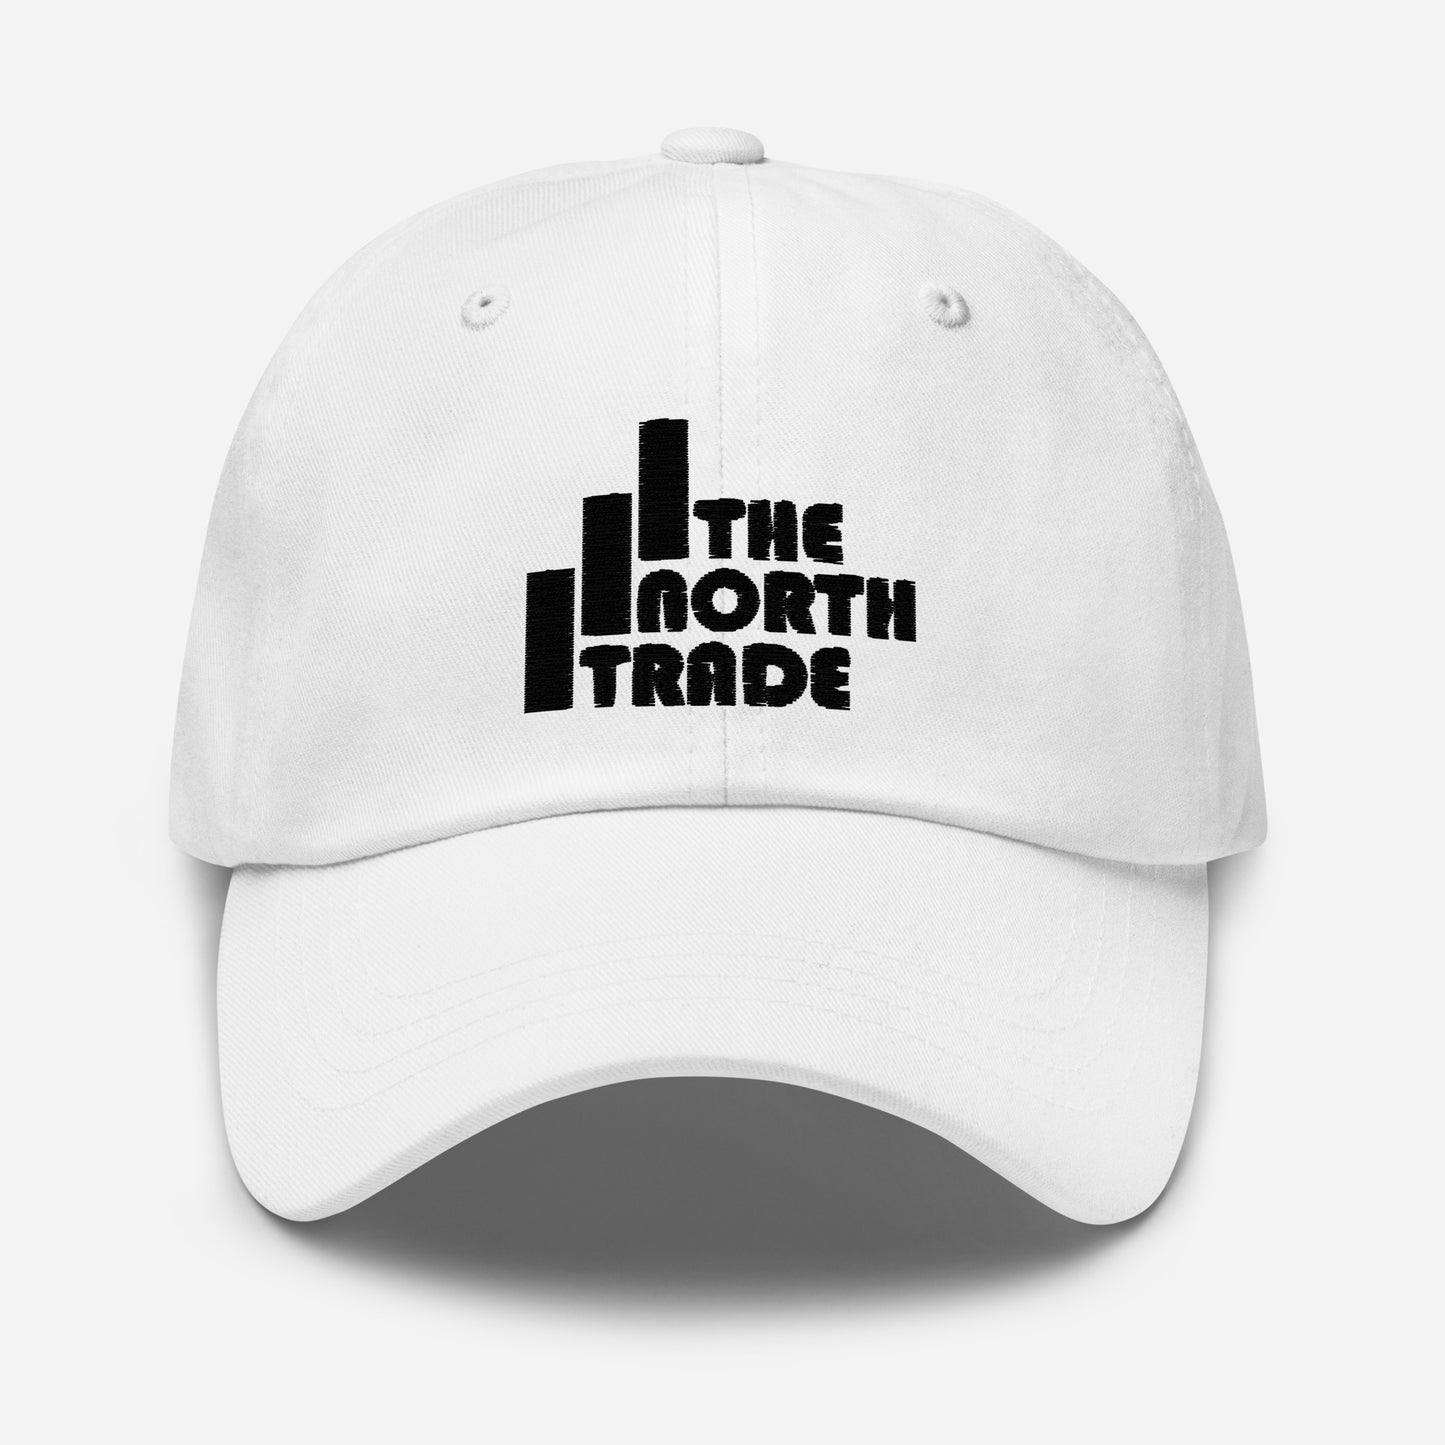 The North Trade Dad Hat